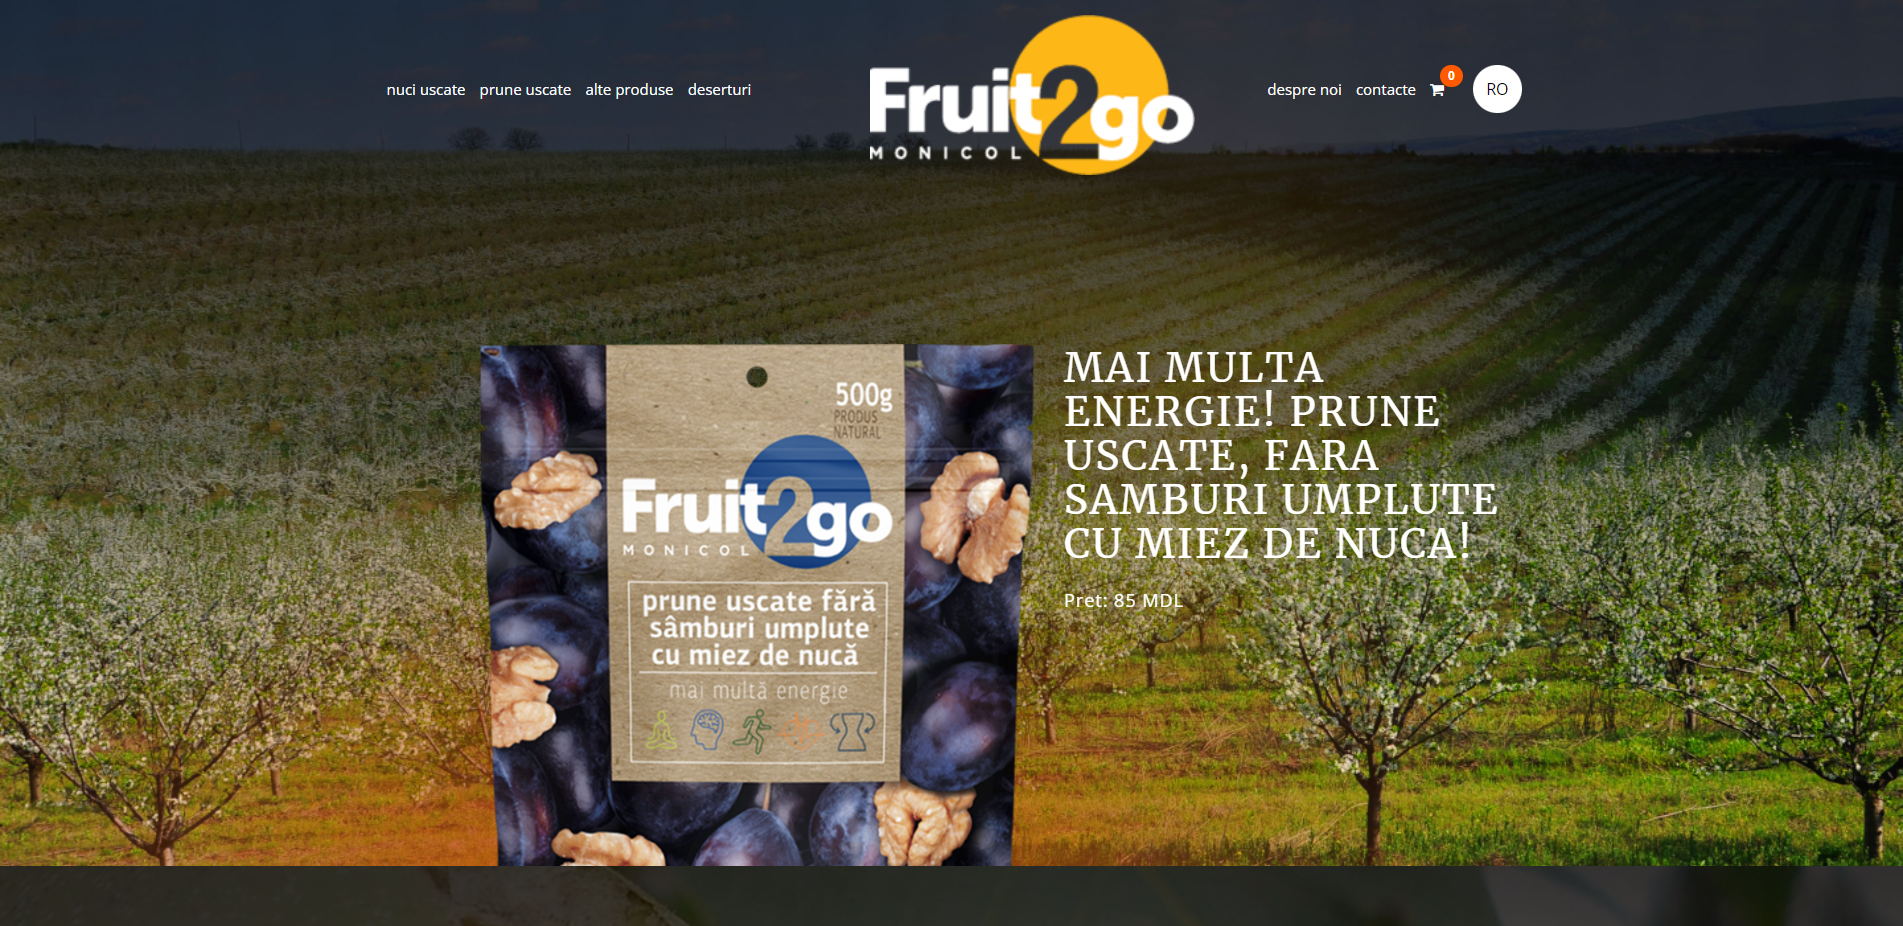 Fruit2Go website Image